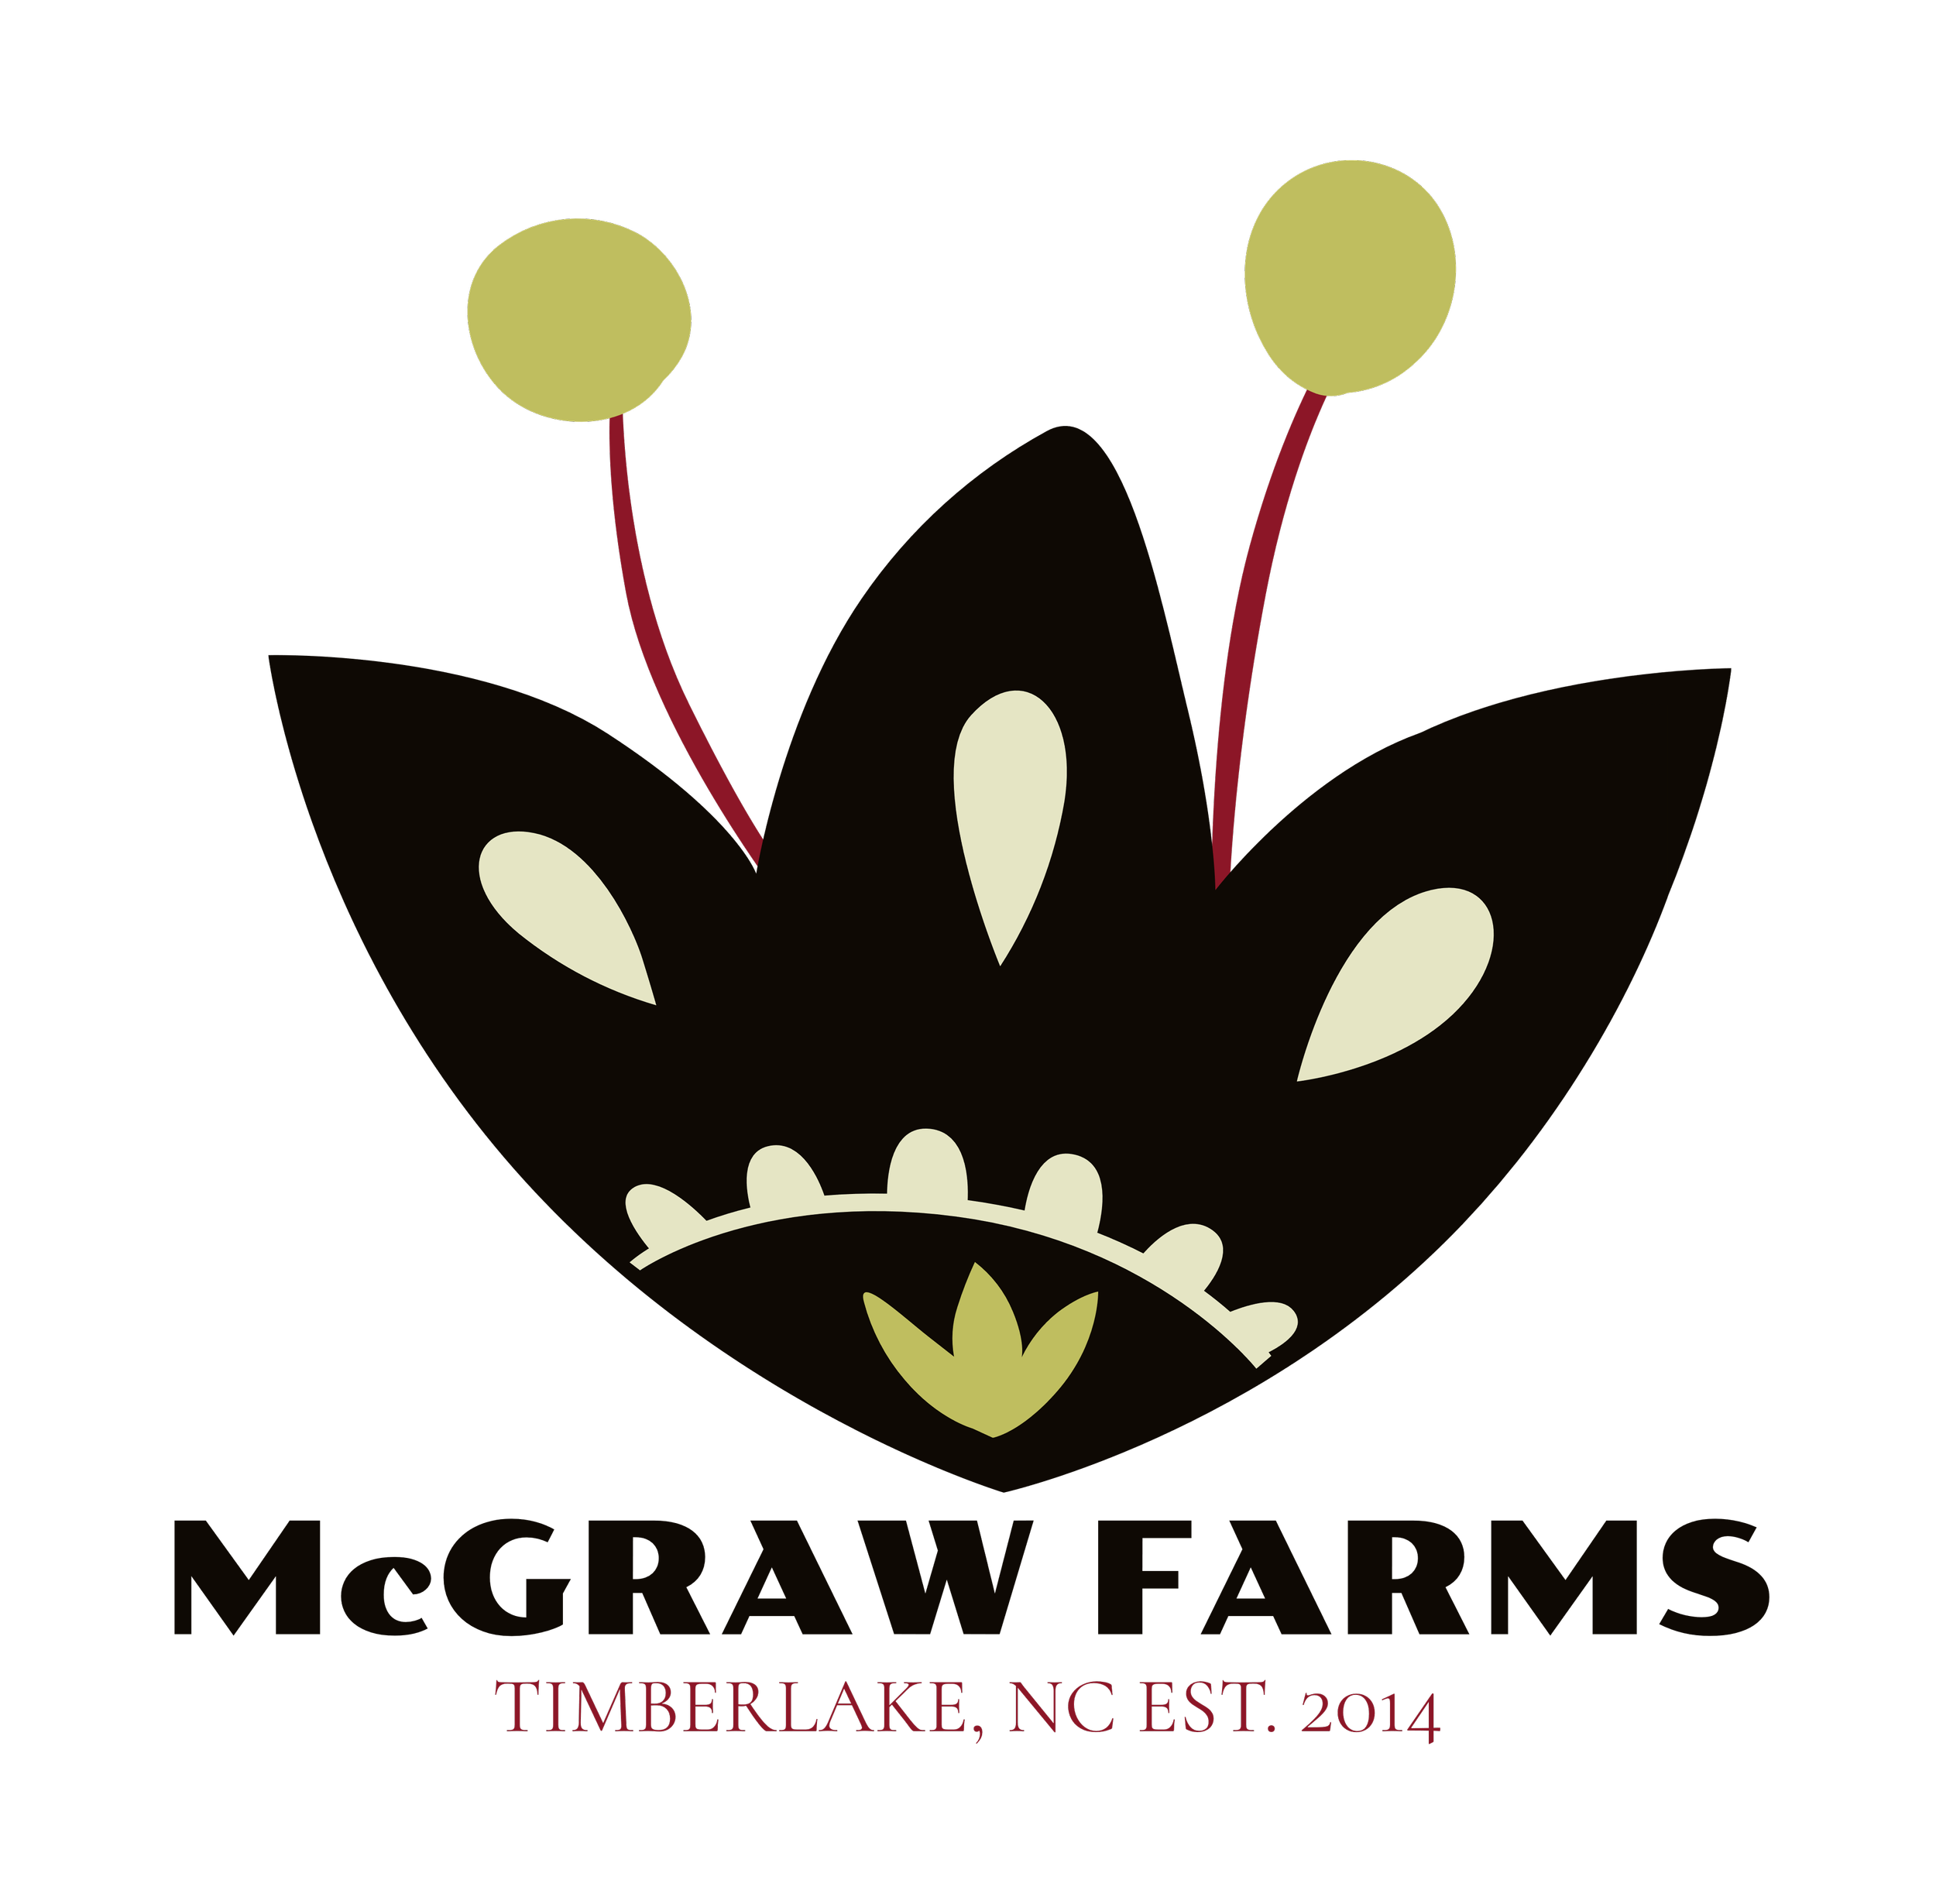 McGRAW FARMS